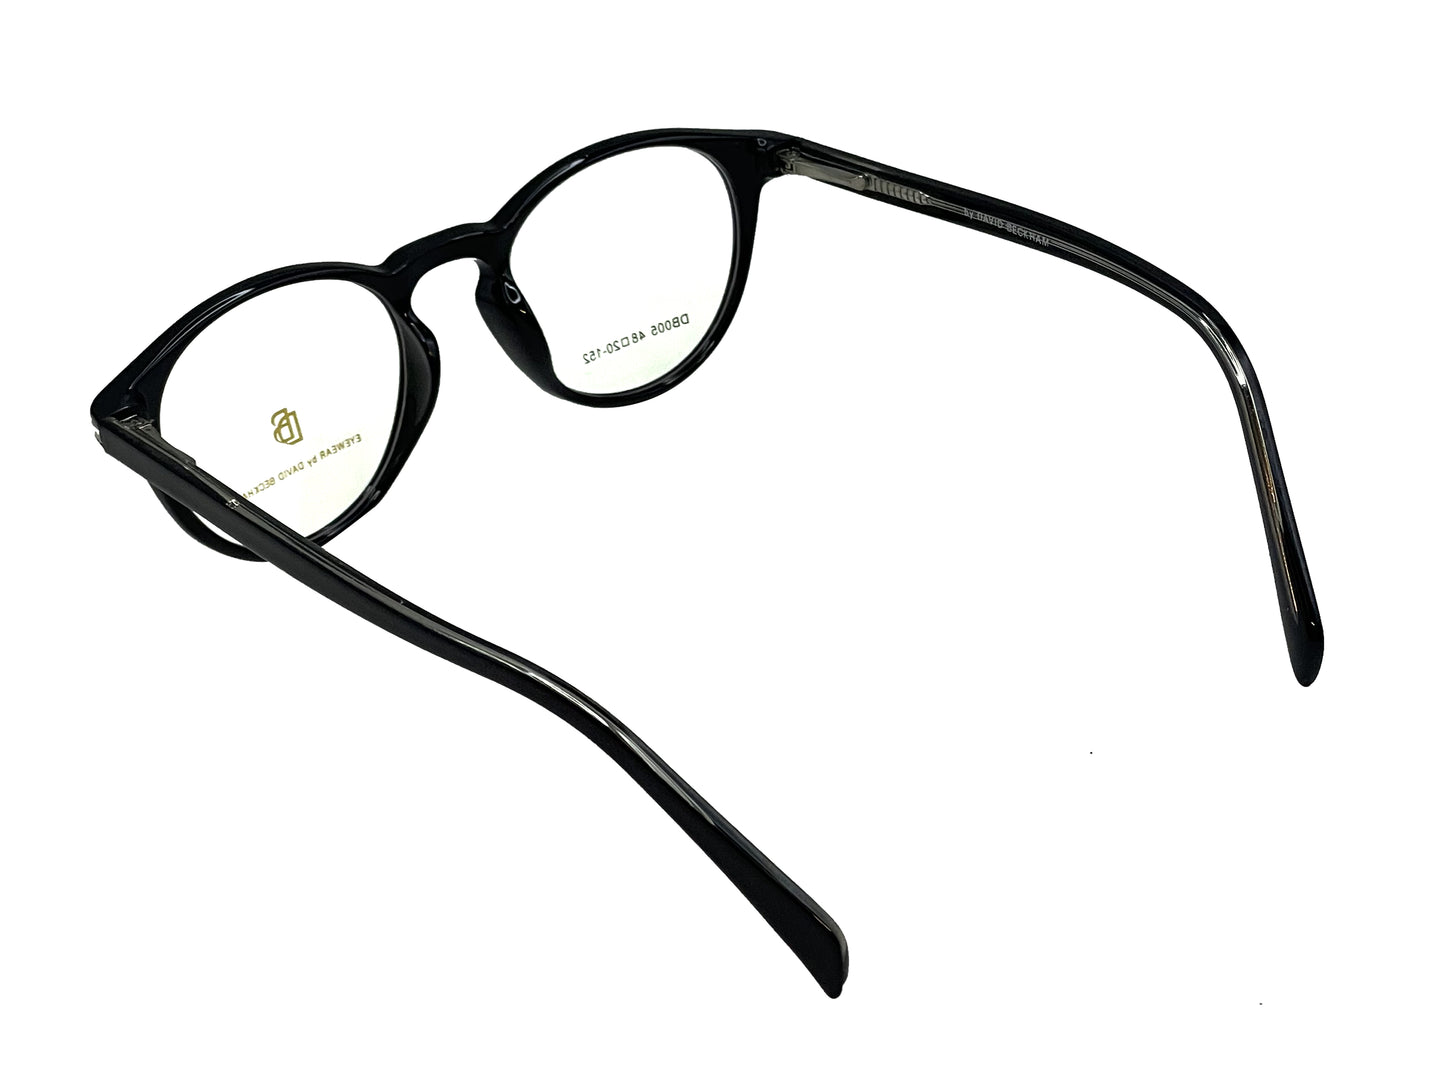 NS Deluxe - 005 - Black - Eyeglasses